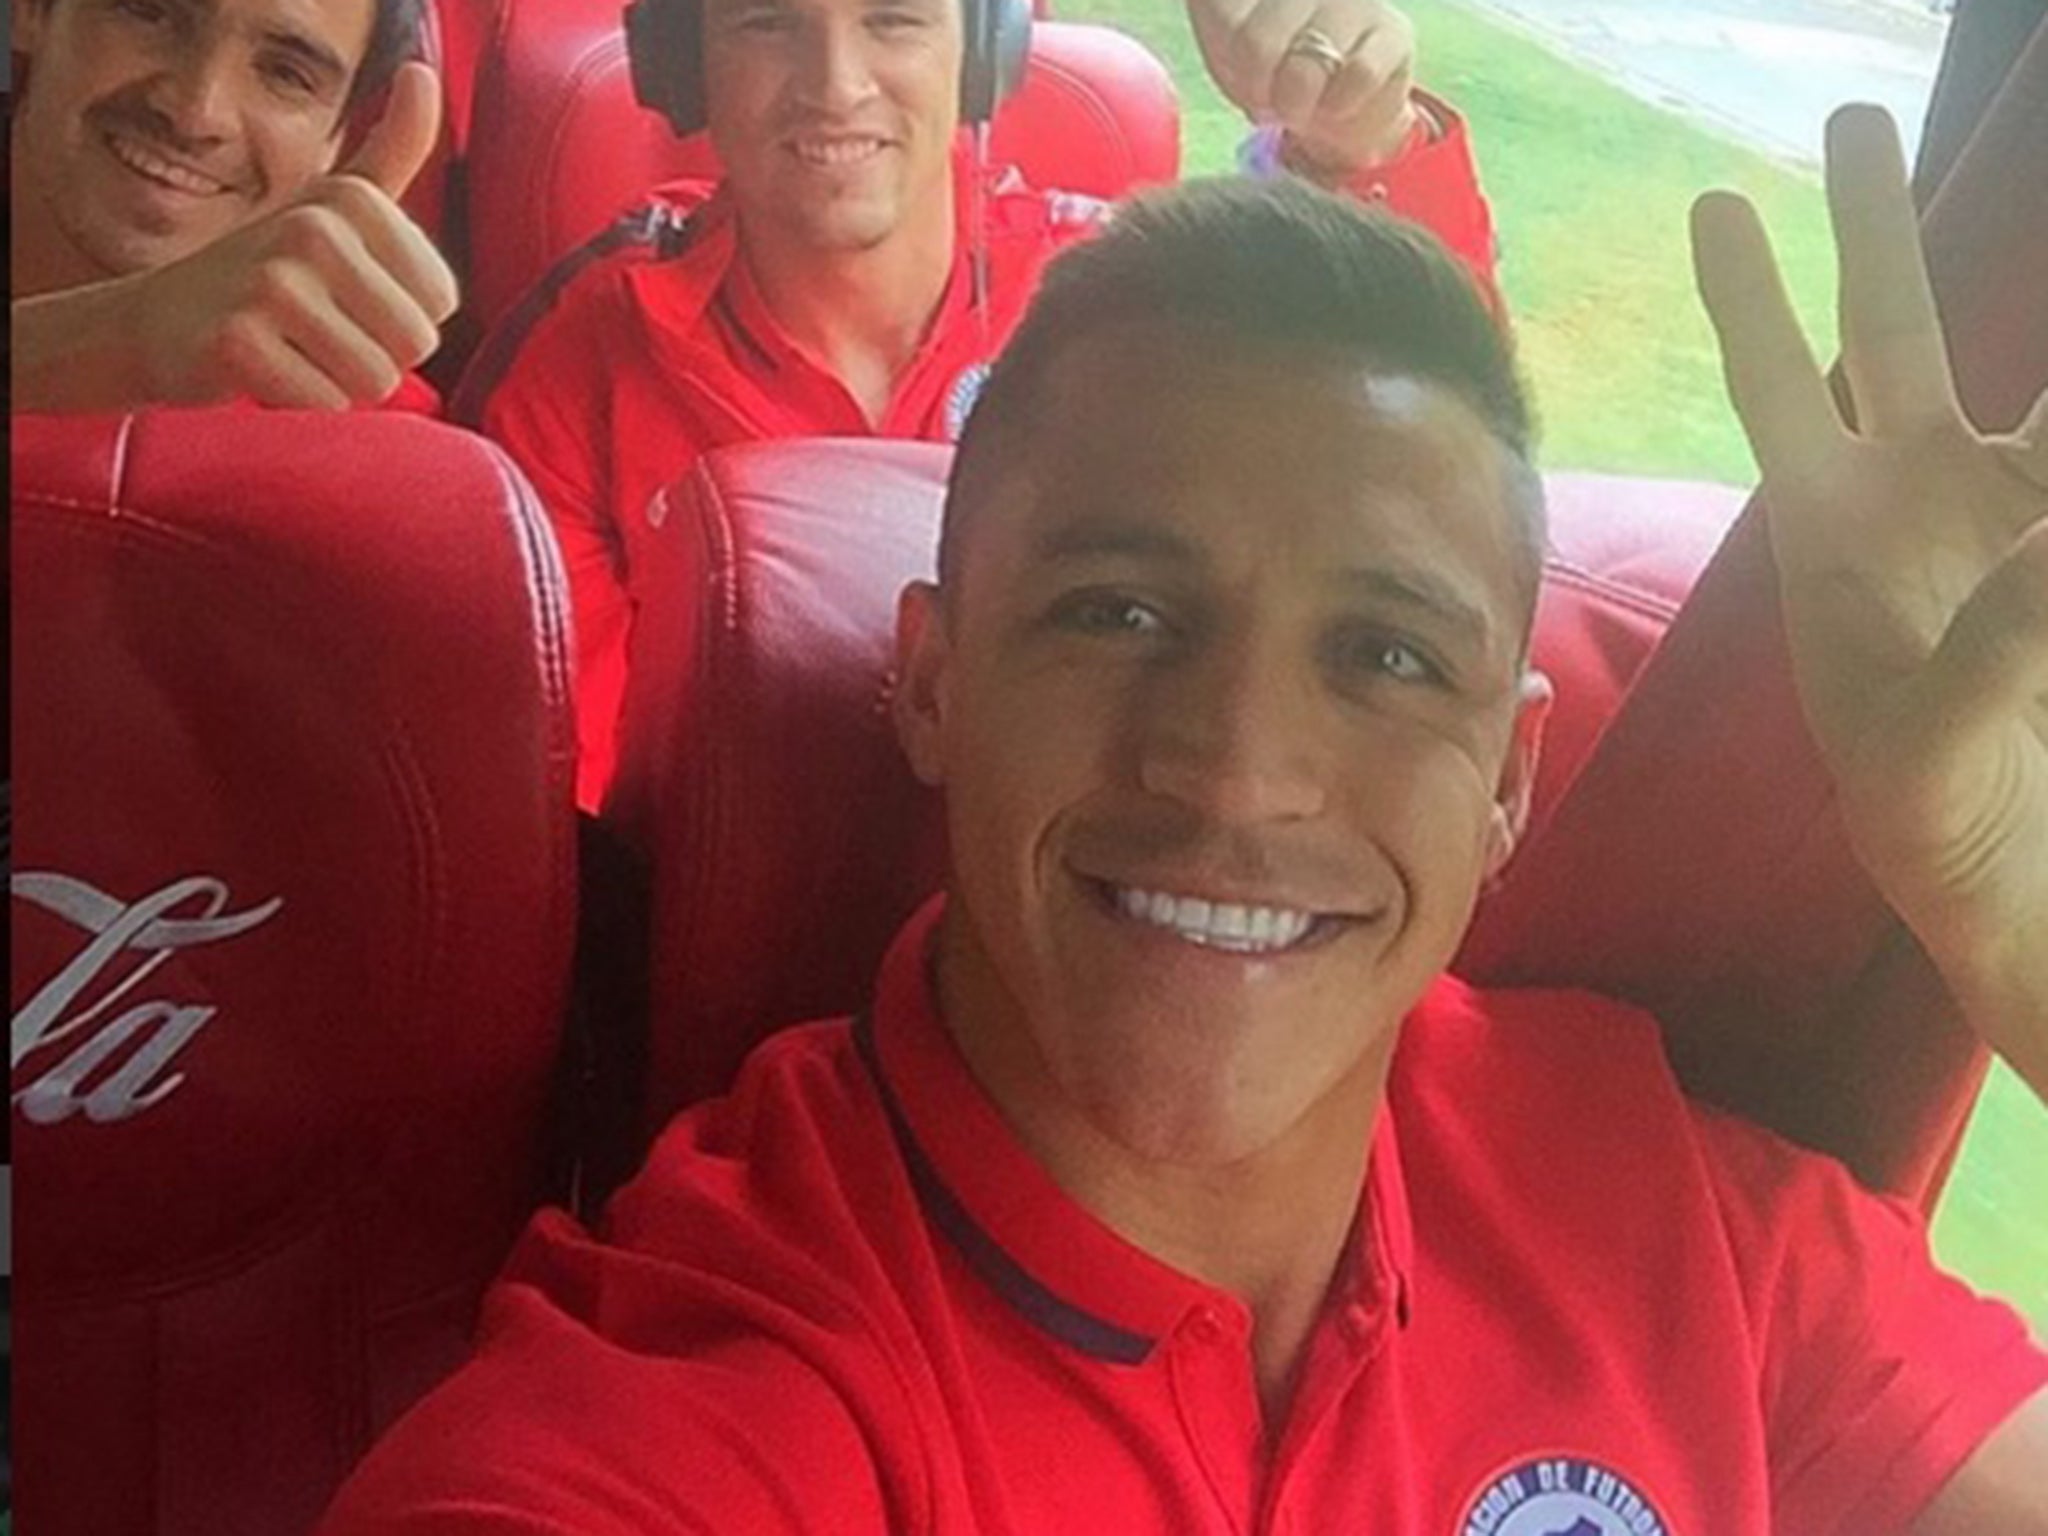 Alexis Sanchez's selfie from the Chile team bus